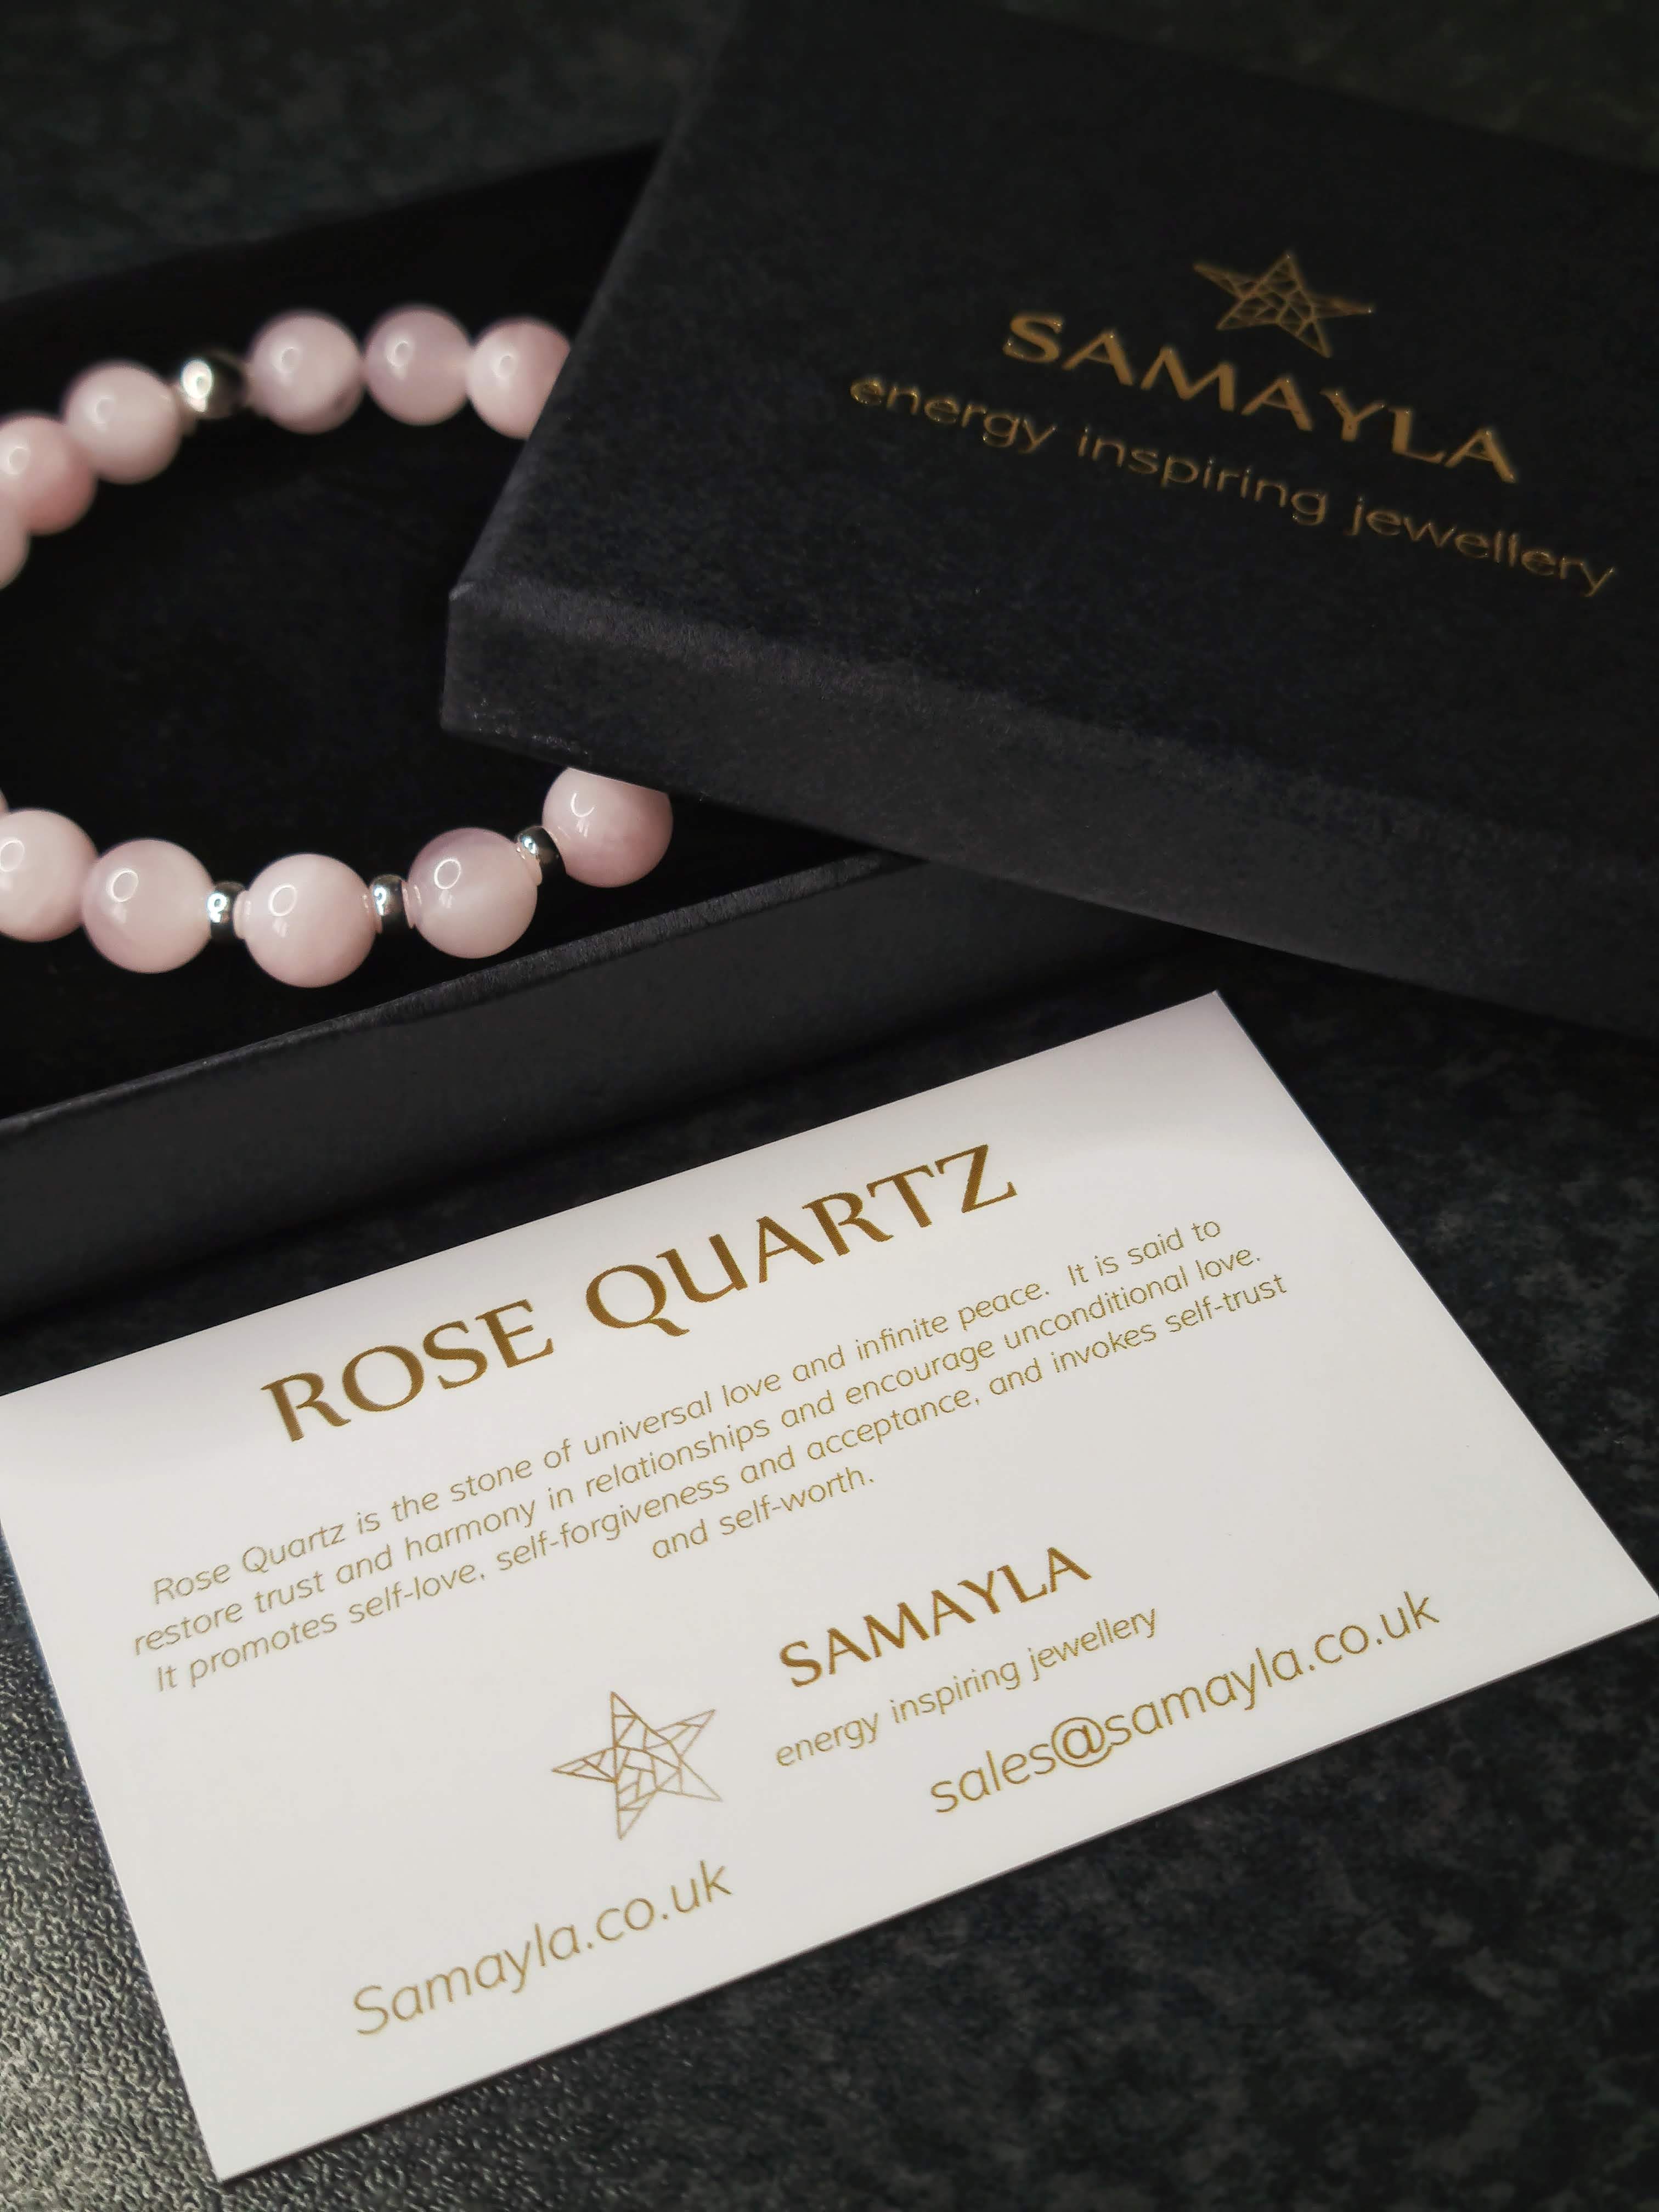 A rose quartz bracelet in a Samayla Jewellery gift box